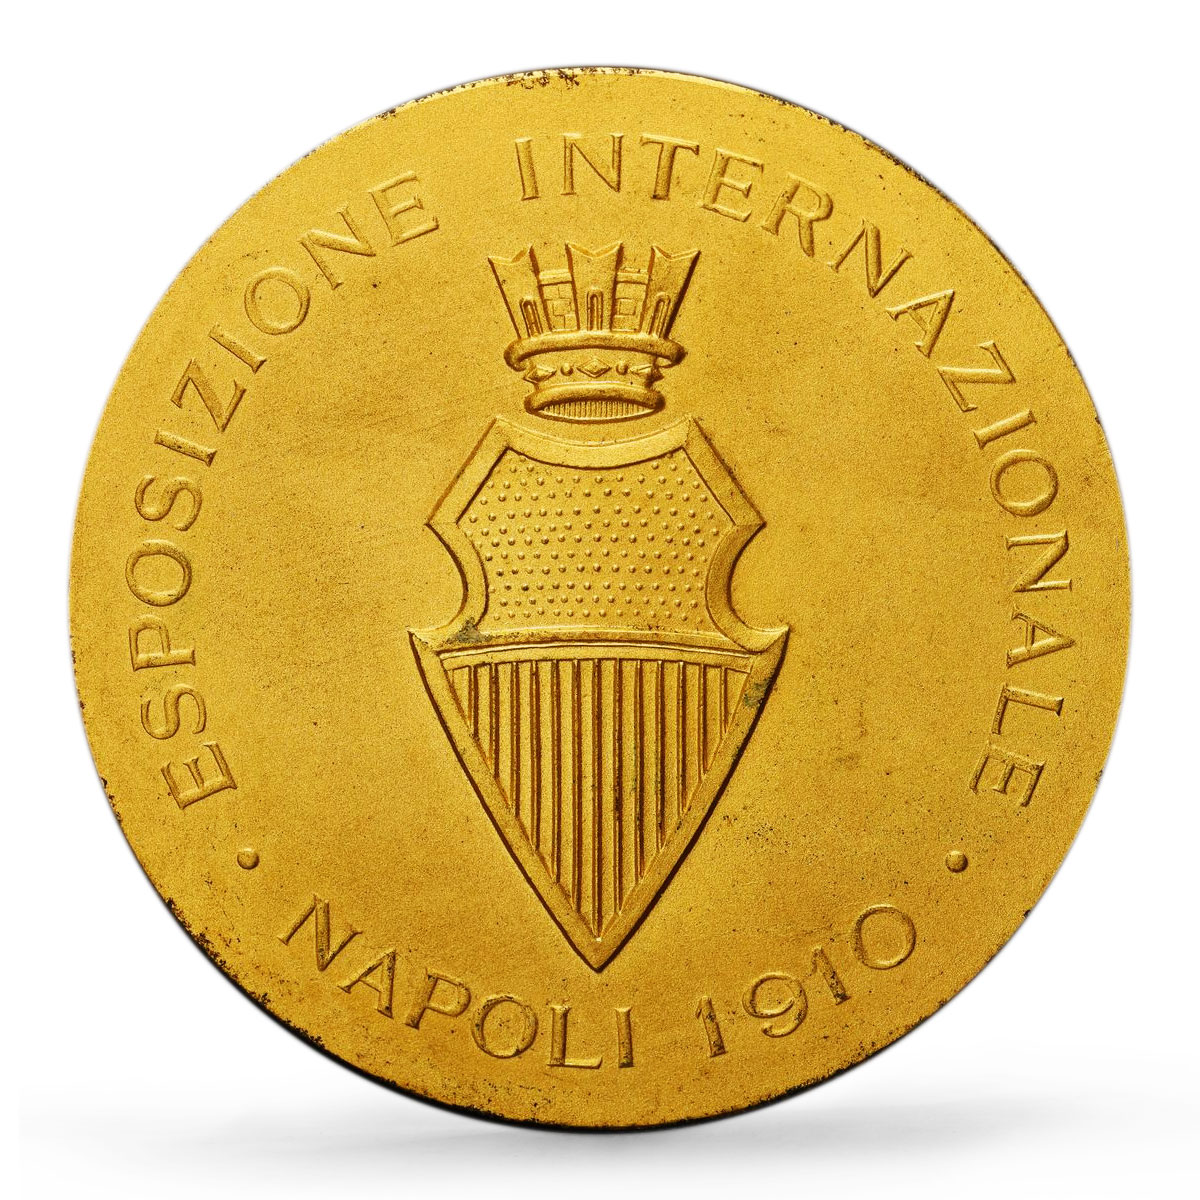 Italy Napoli International Expo Vittorio III Gilt SP65 PCGS copper medal 1910